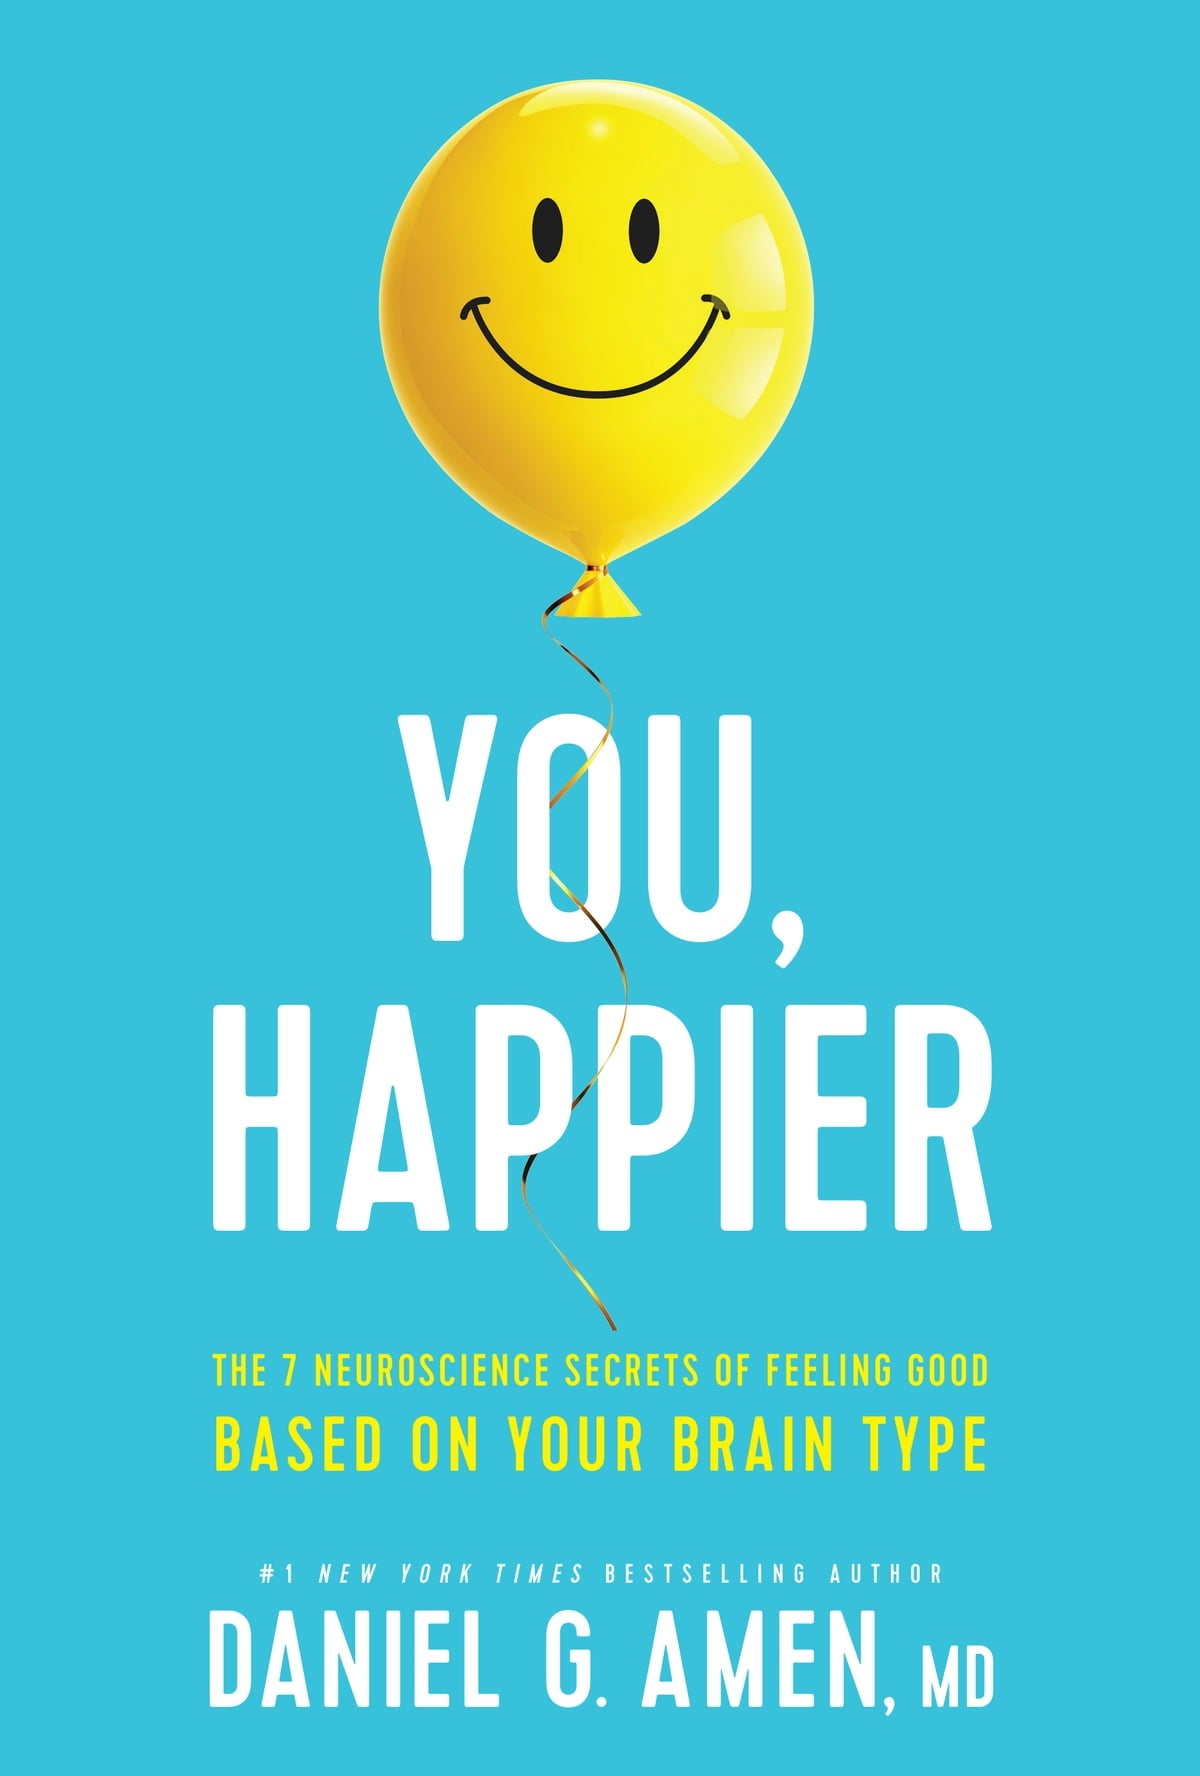 You, Happier: The 7 Neuroscience Secrets of Feeling Good Based on Your Brain Type by Daniel G. Amen